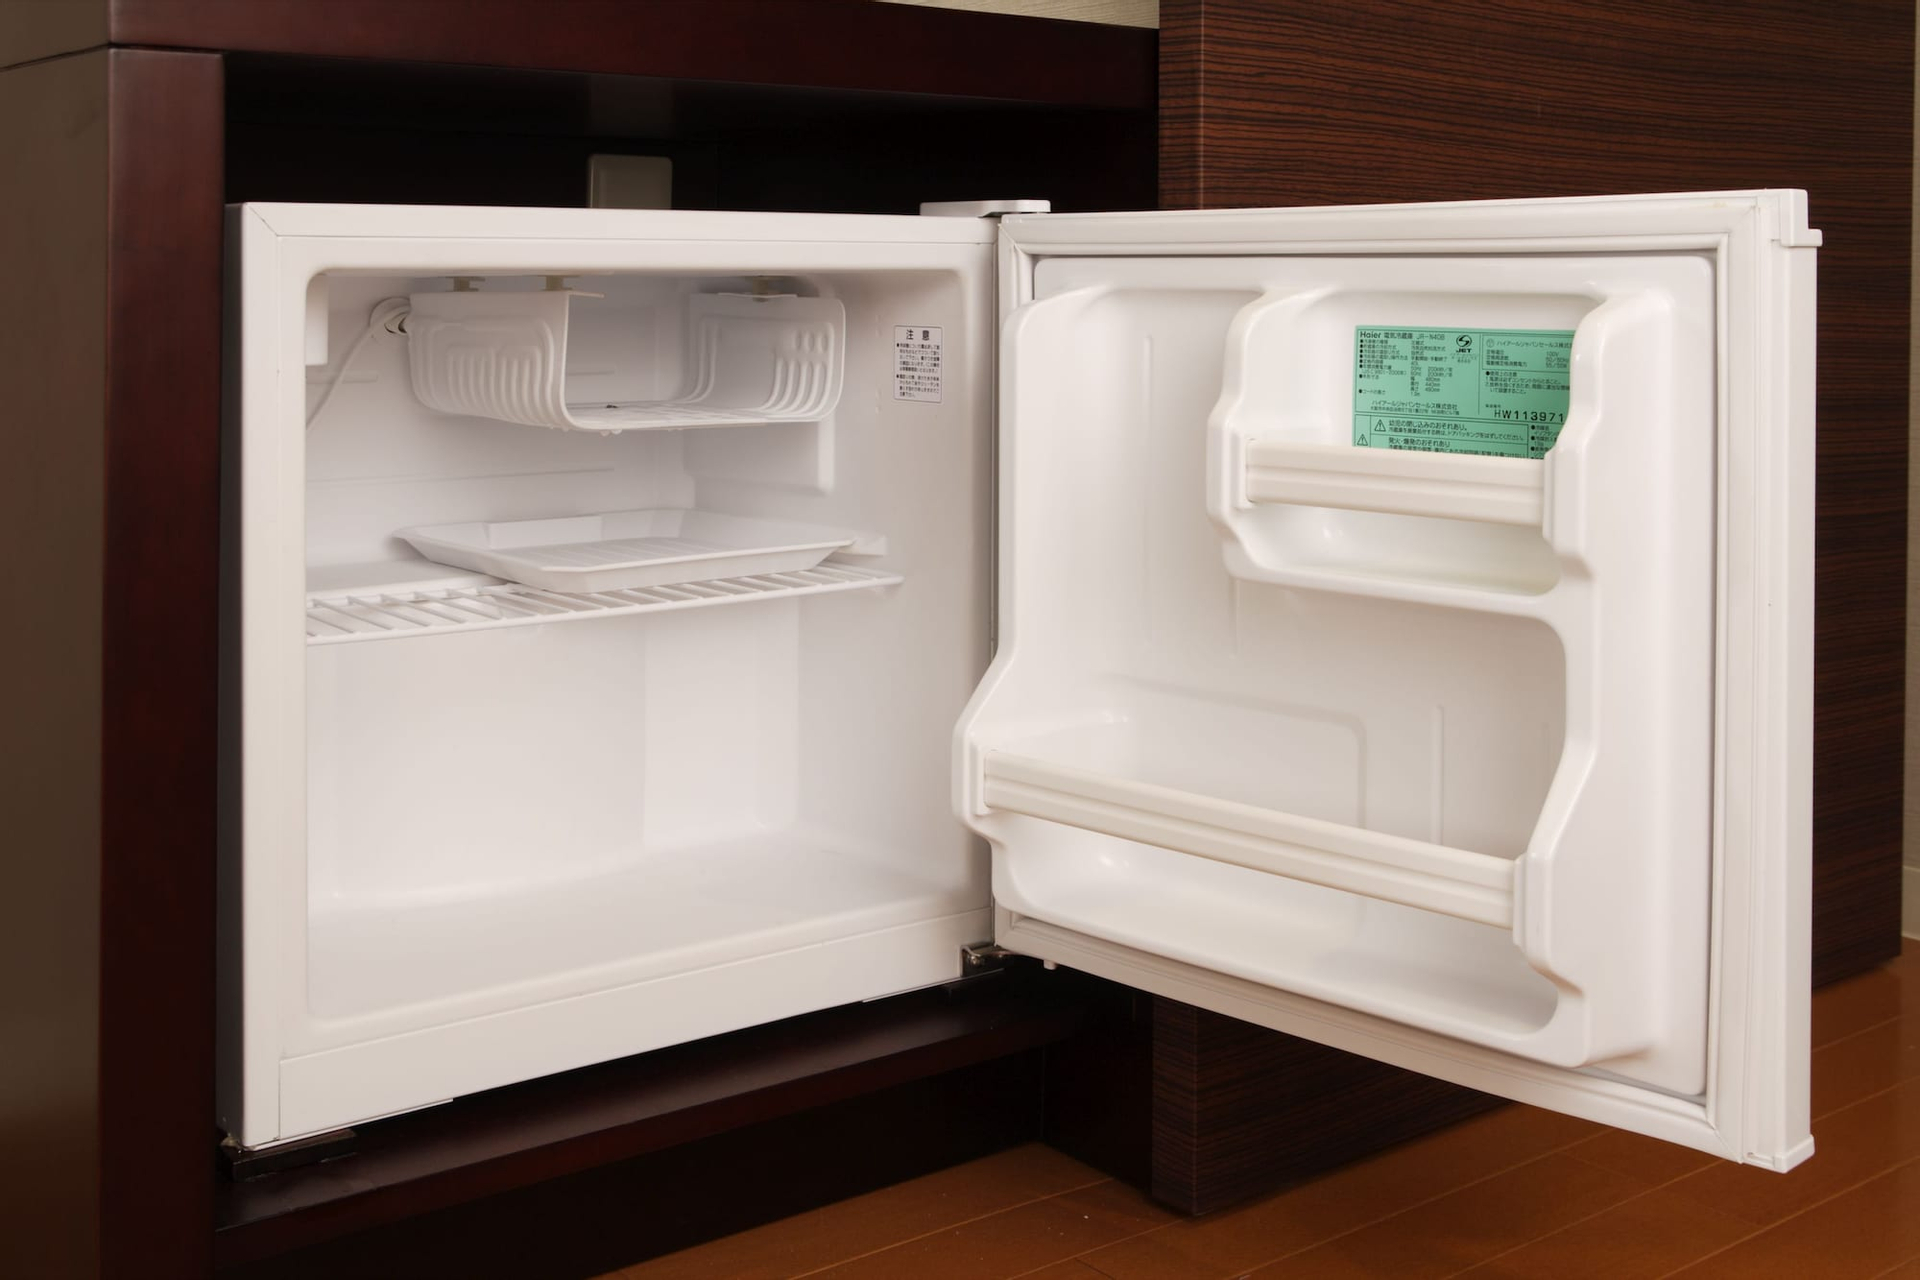 Mini-refrigerator 20